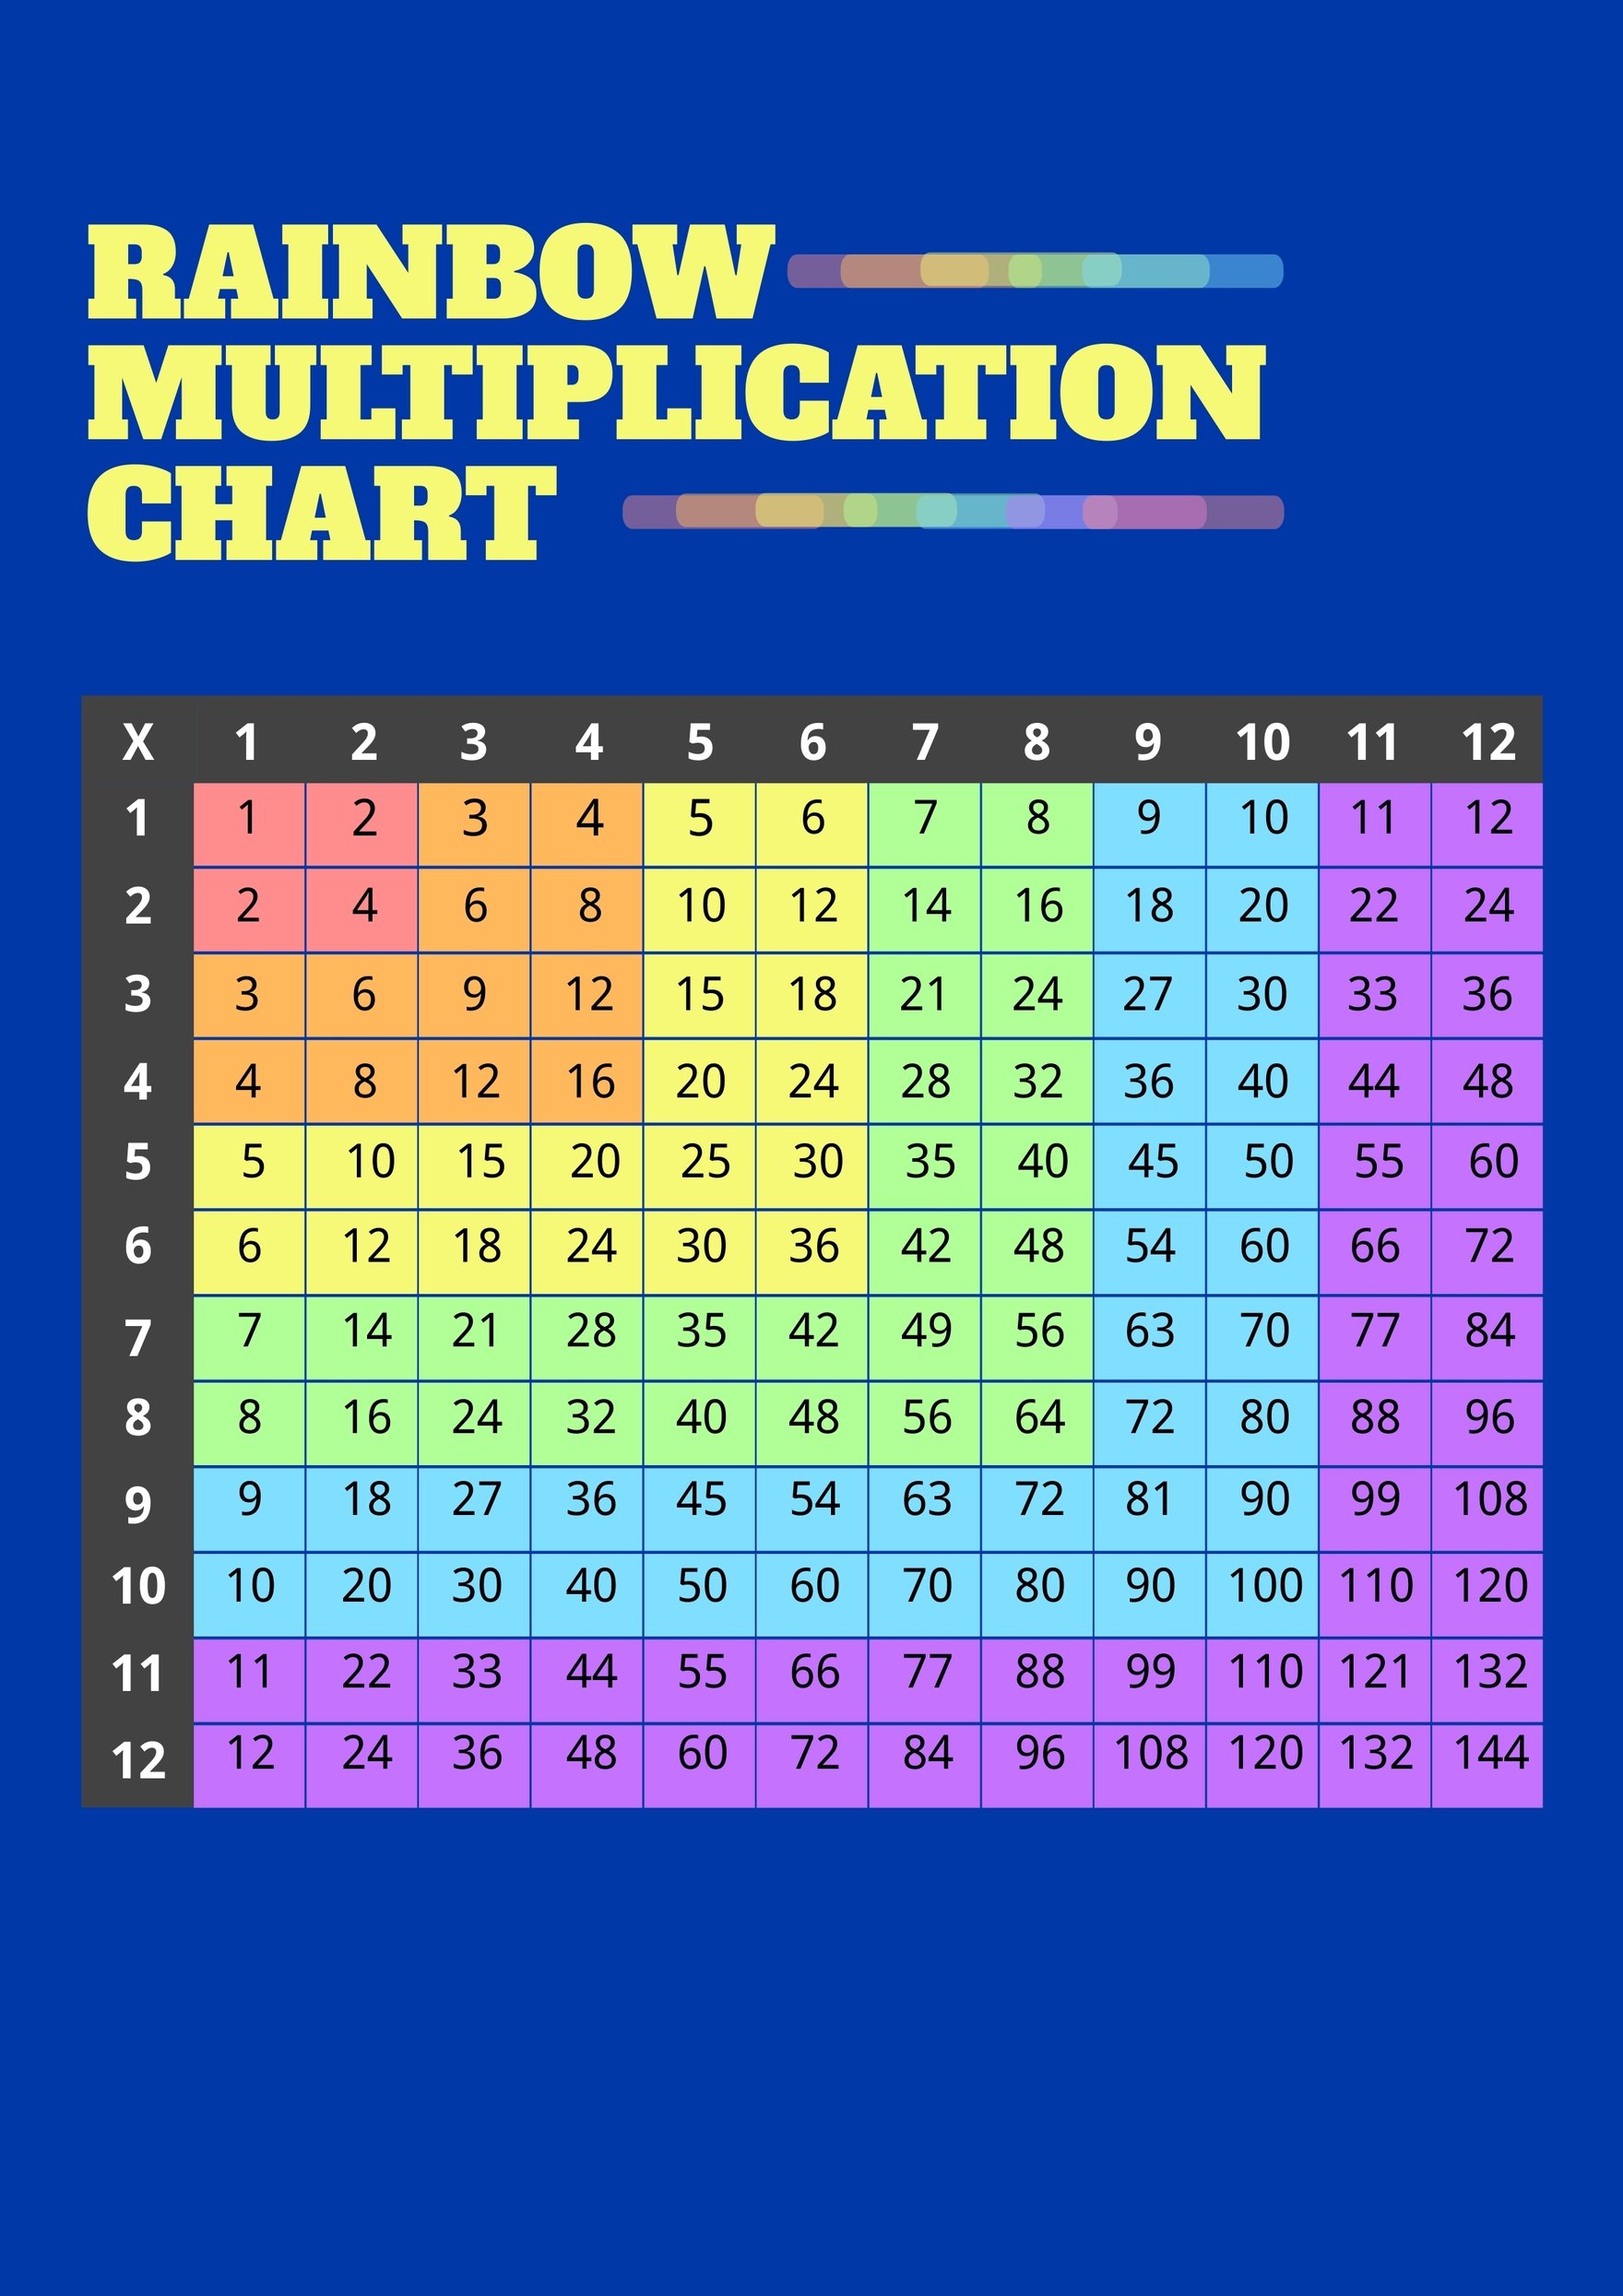 multiplication-table-pdf-color-elcho-table